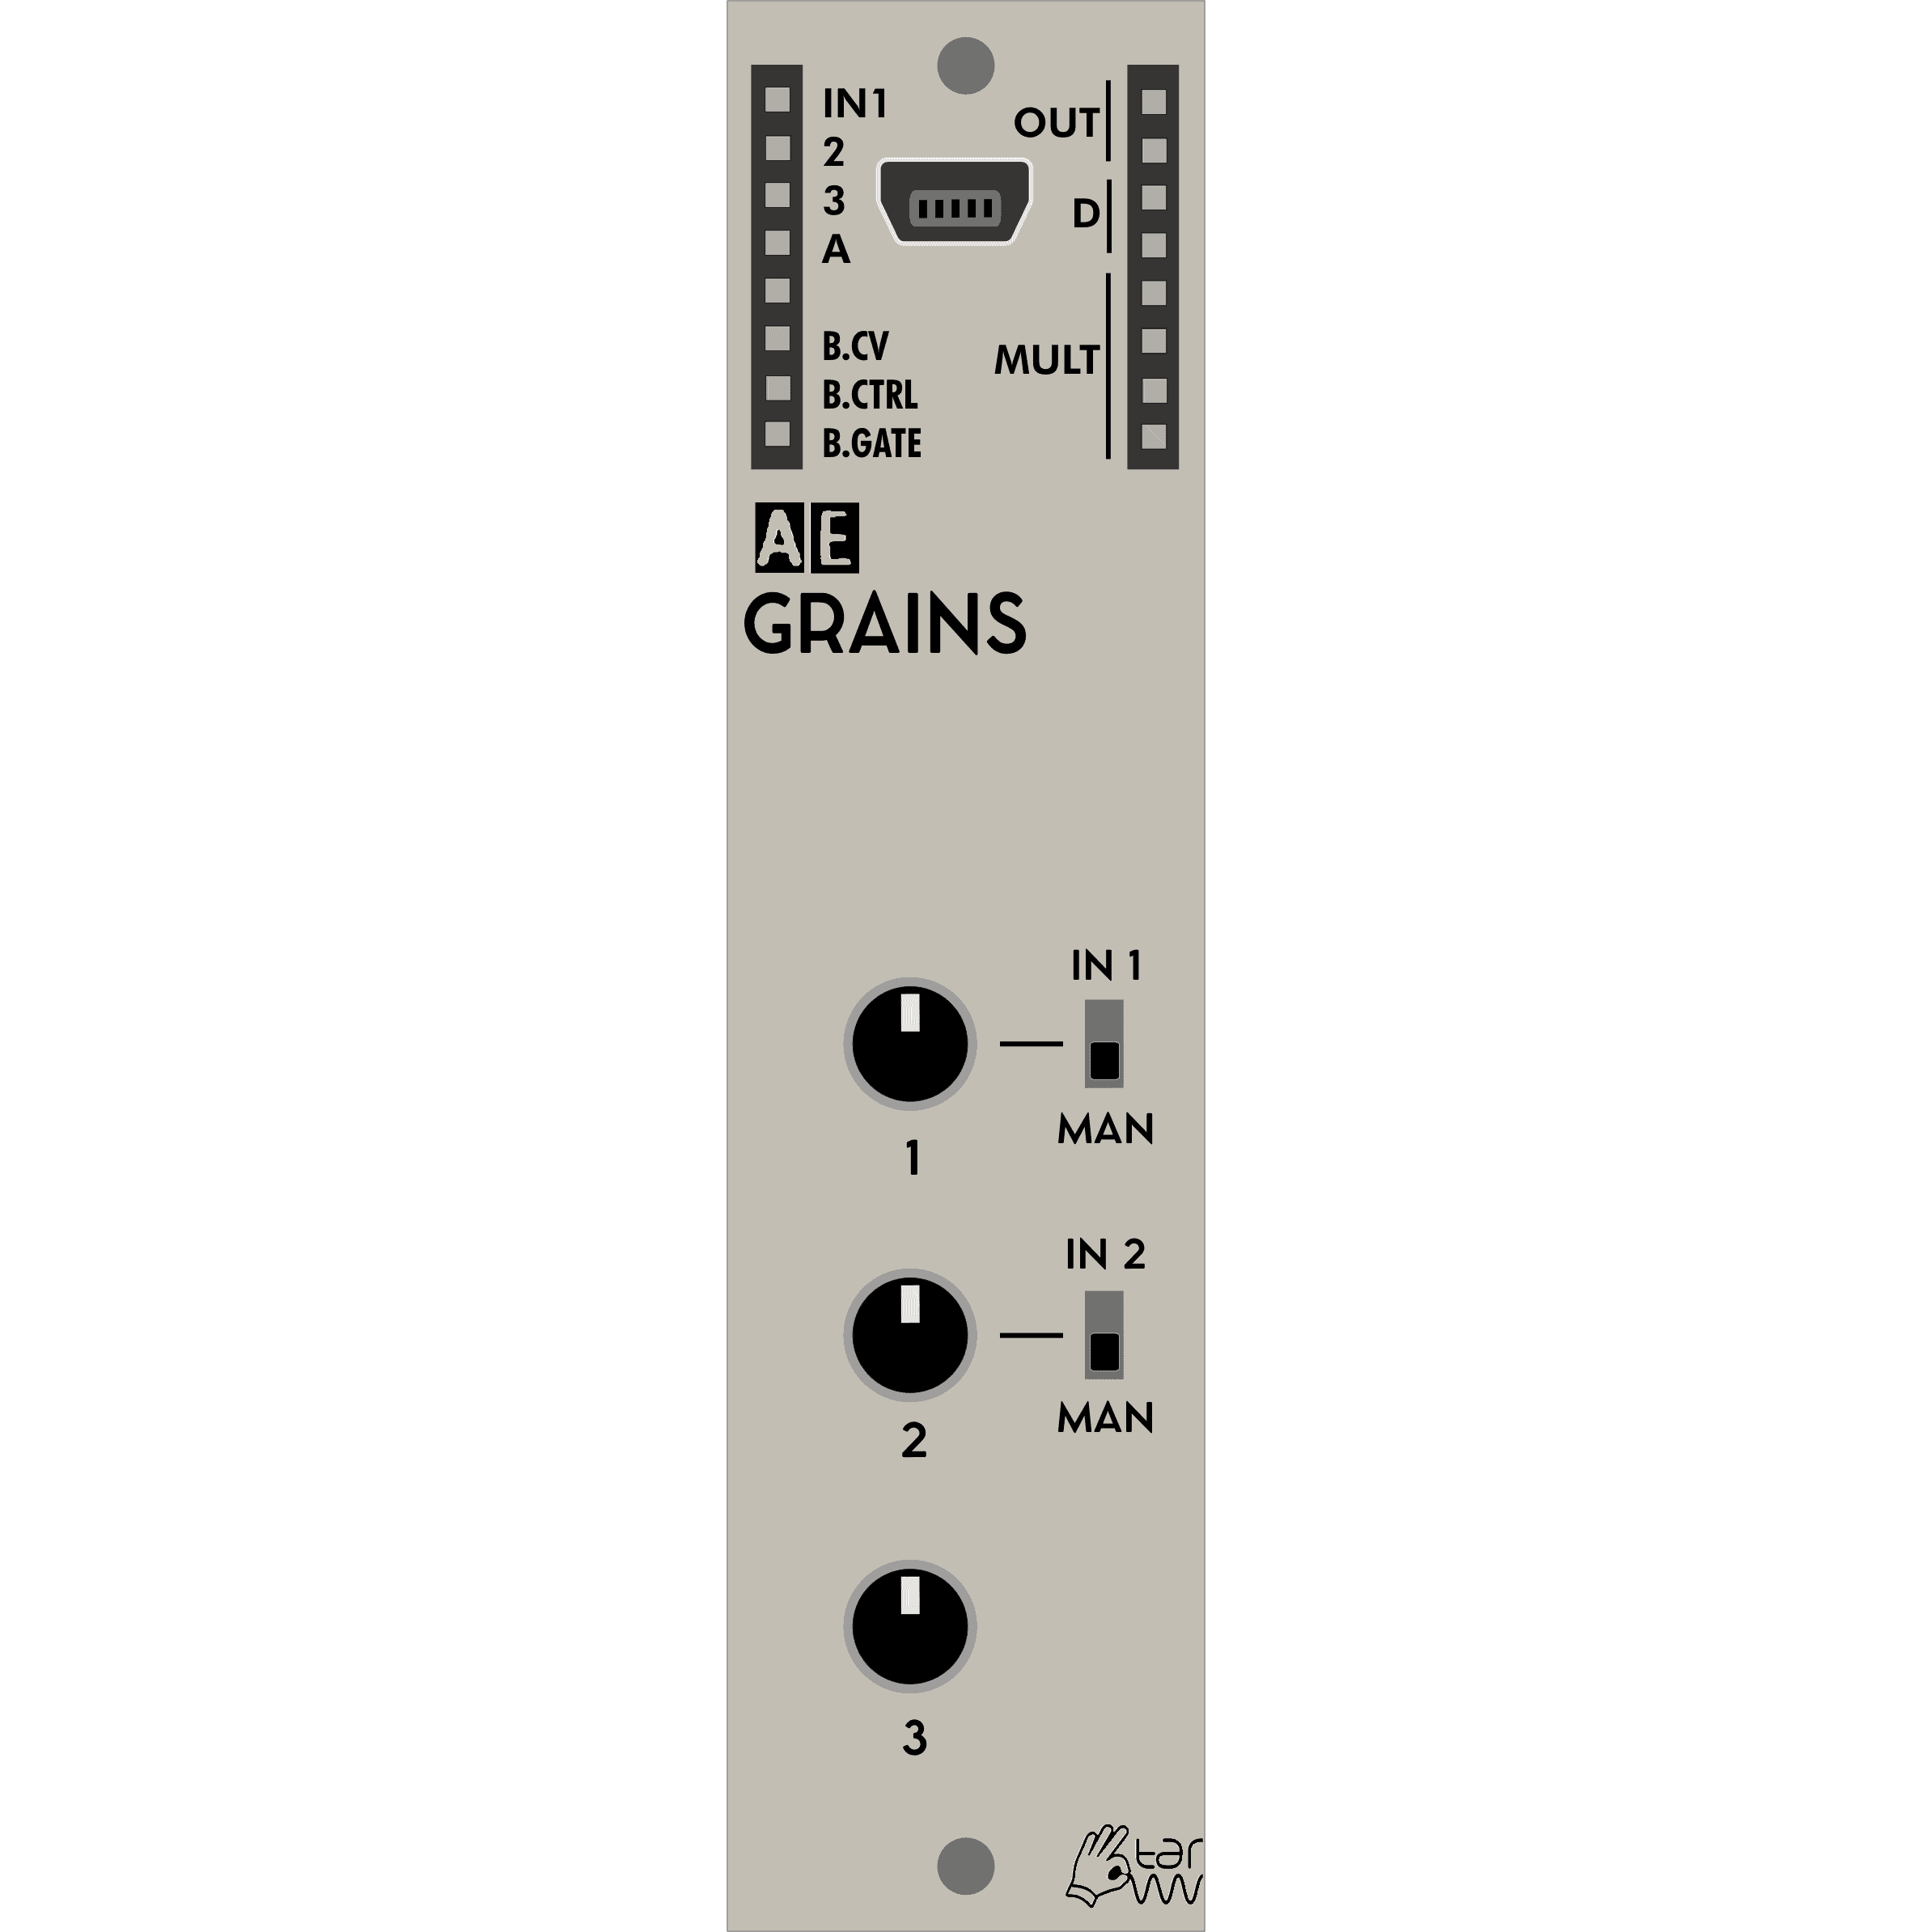 GRAINS a Granular Oscillator Multi Purpose Module for AE Modular large